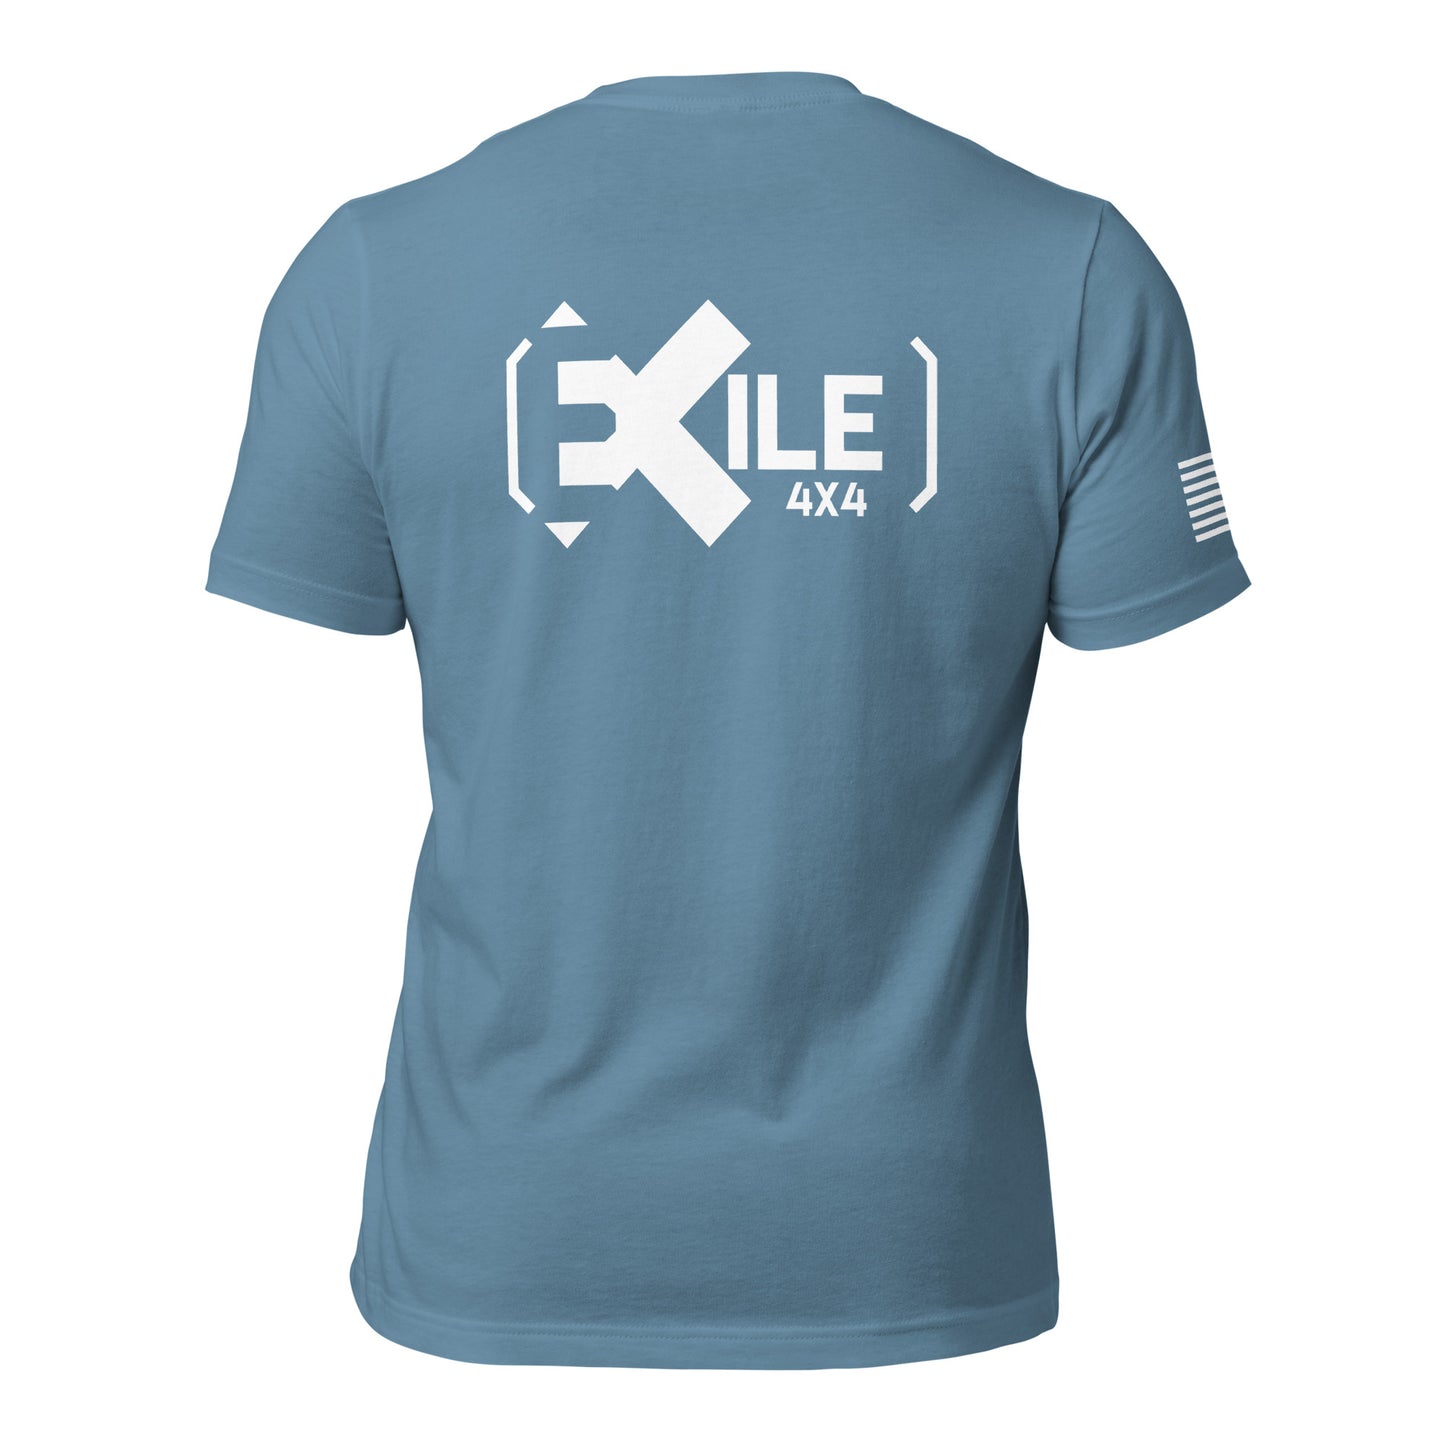 Team Exile Unisex t-shirt